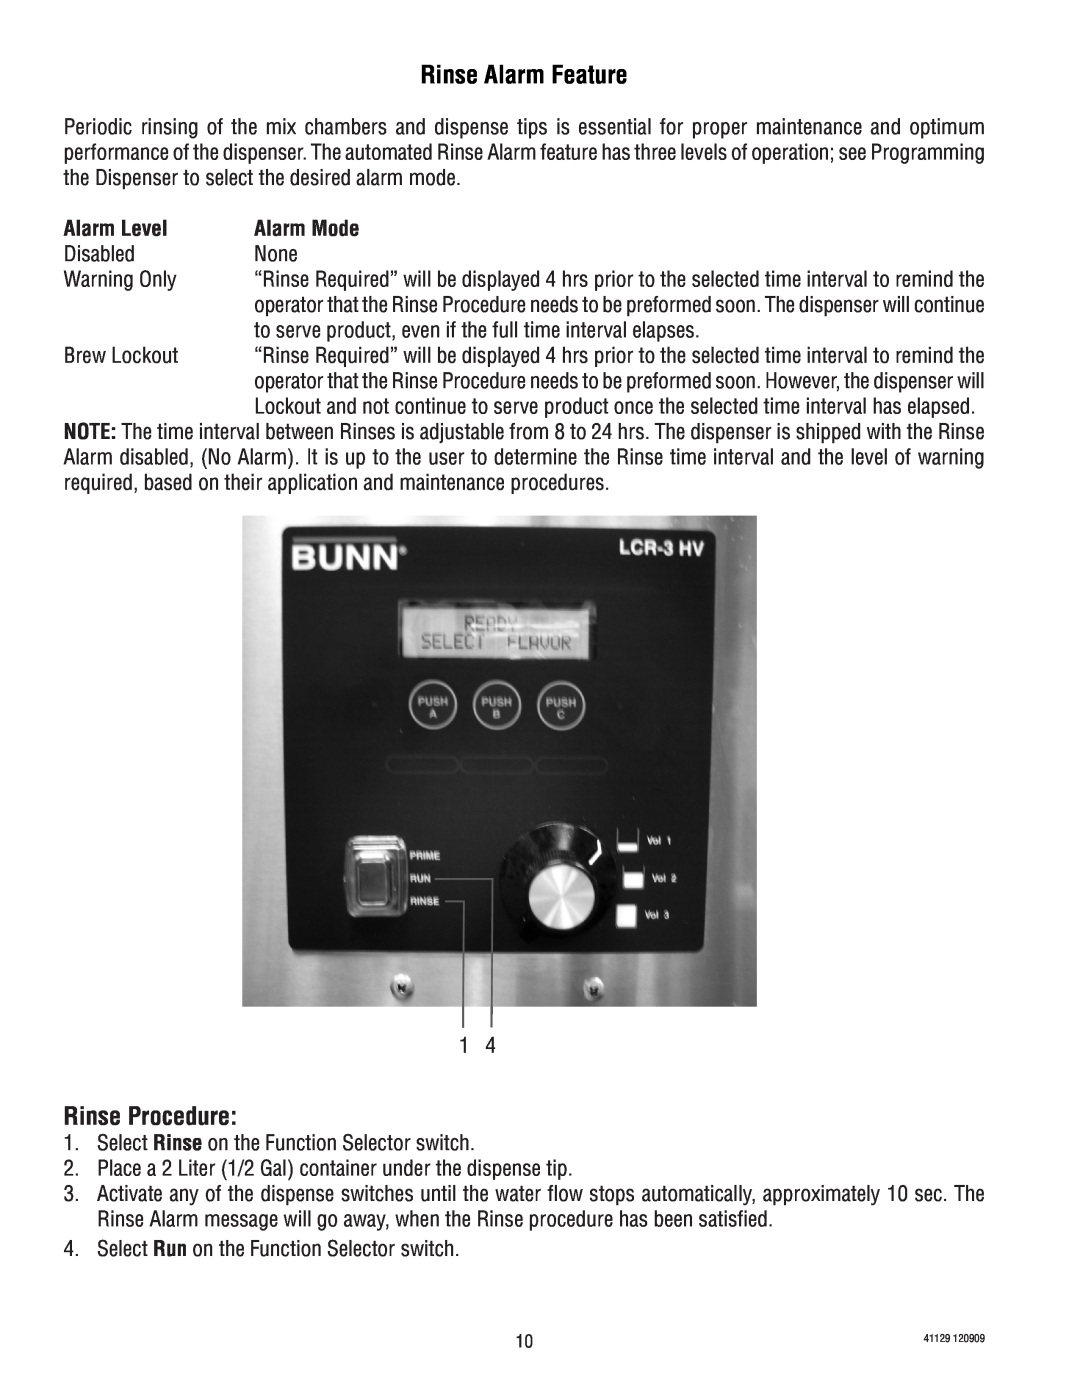 Bunn LCR-3 service manual Rinse Alarm Feature, Rinse Procedure, Alarm Level, Alarm Mode 